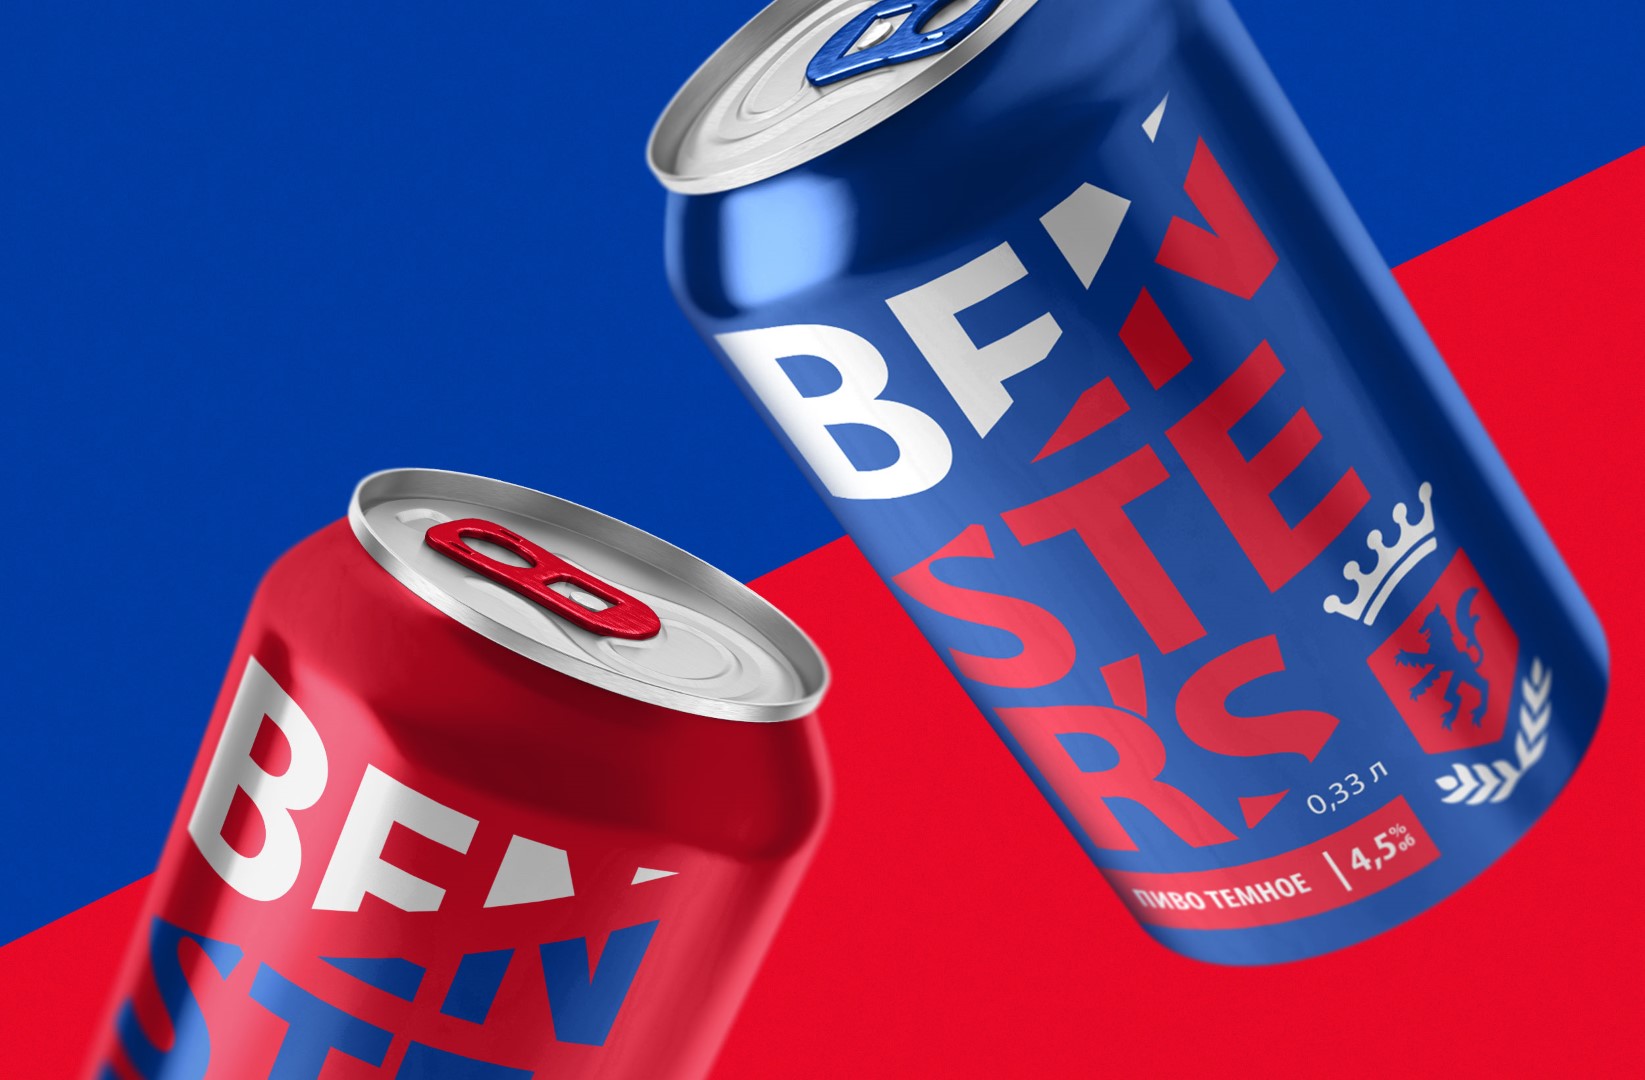 Branding agency DDC.Lab – Benster’s beer